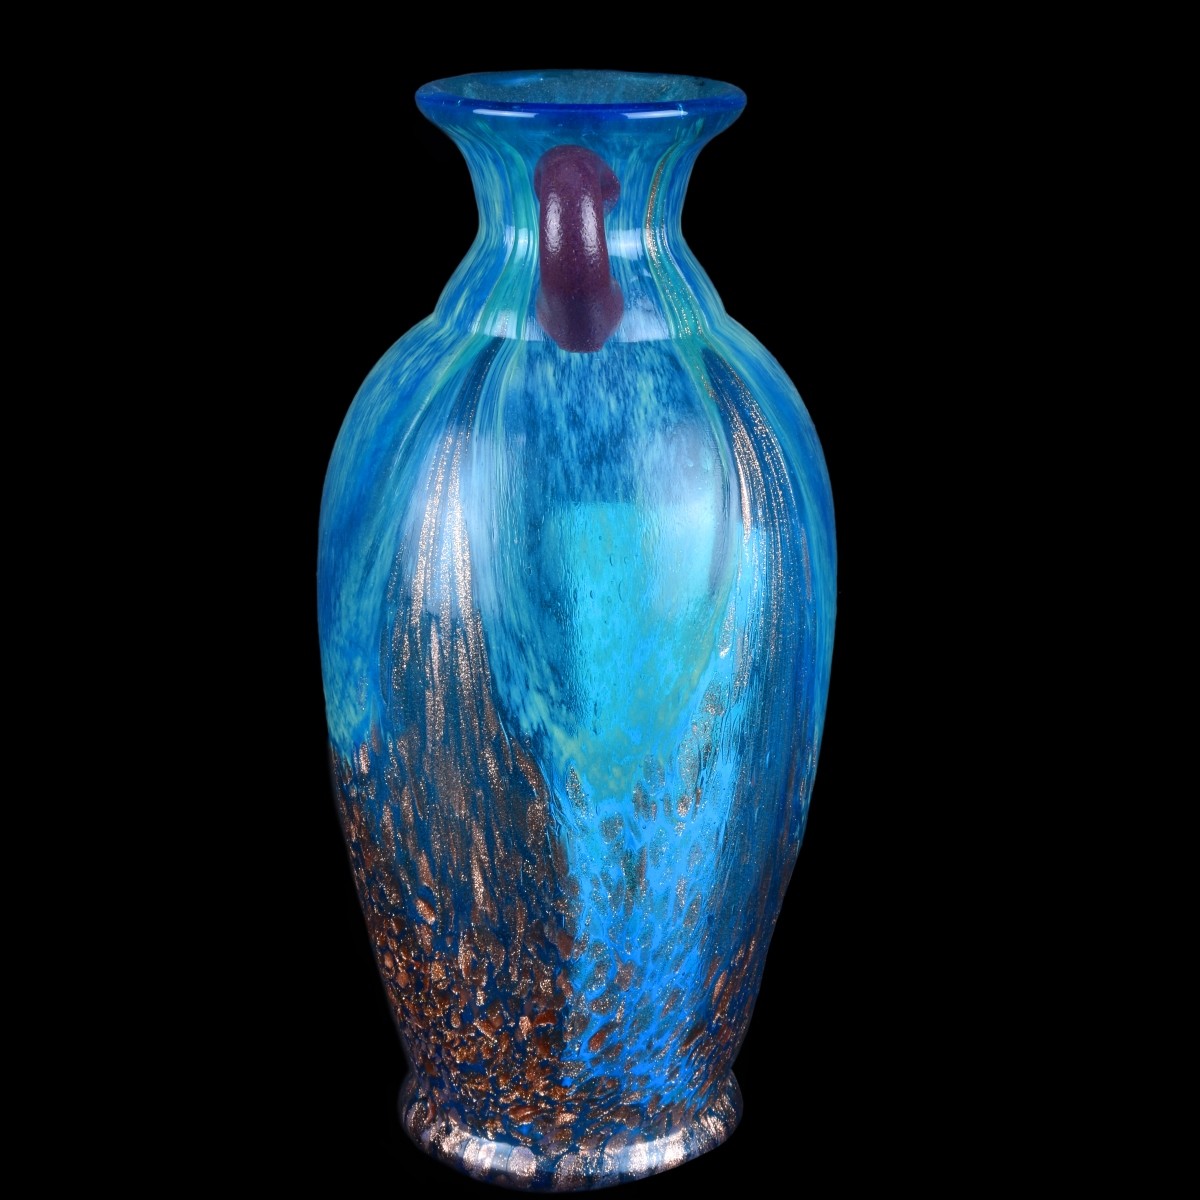 Three (3) Contemporary Art Glass Vases